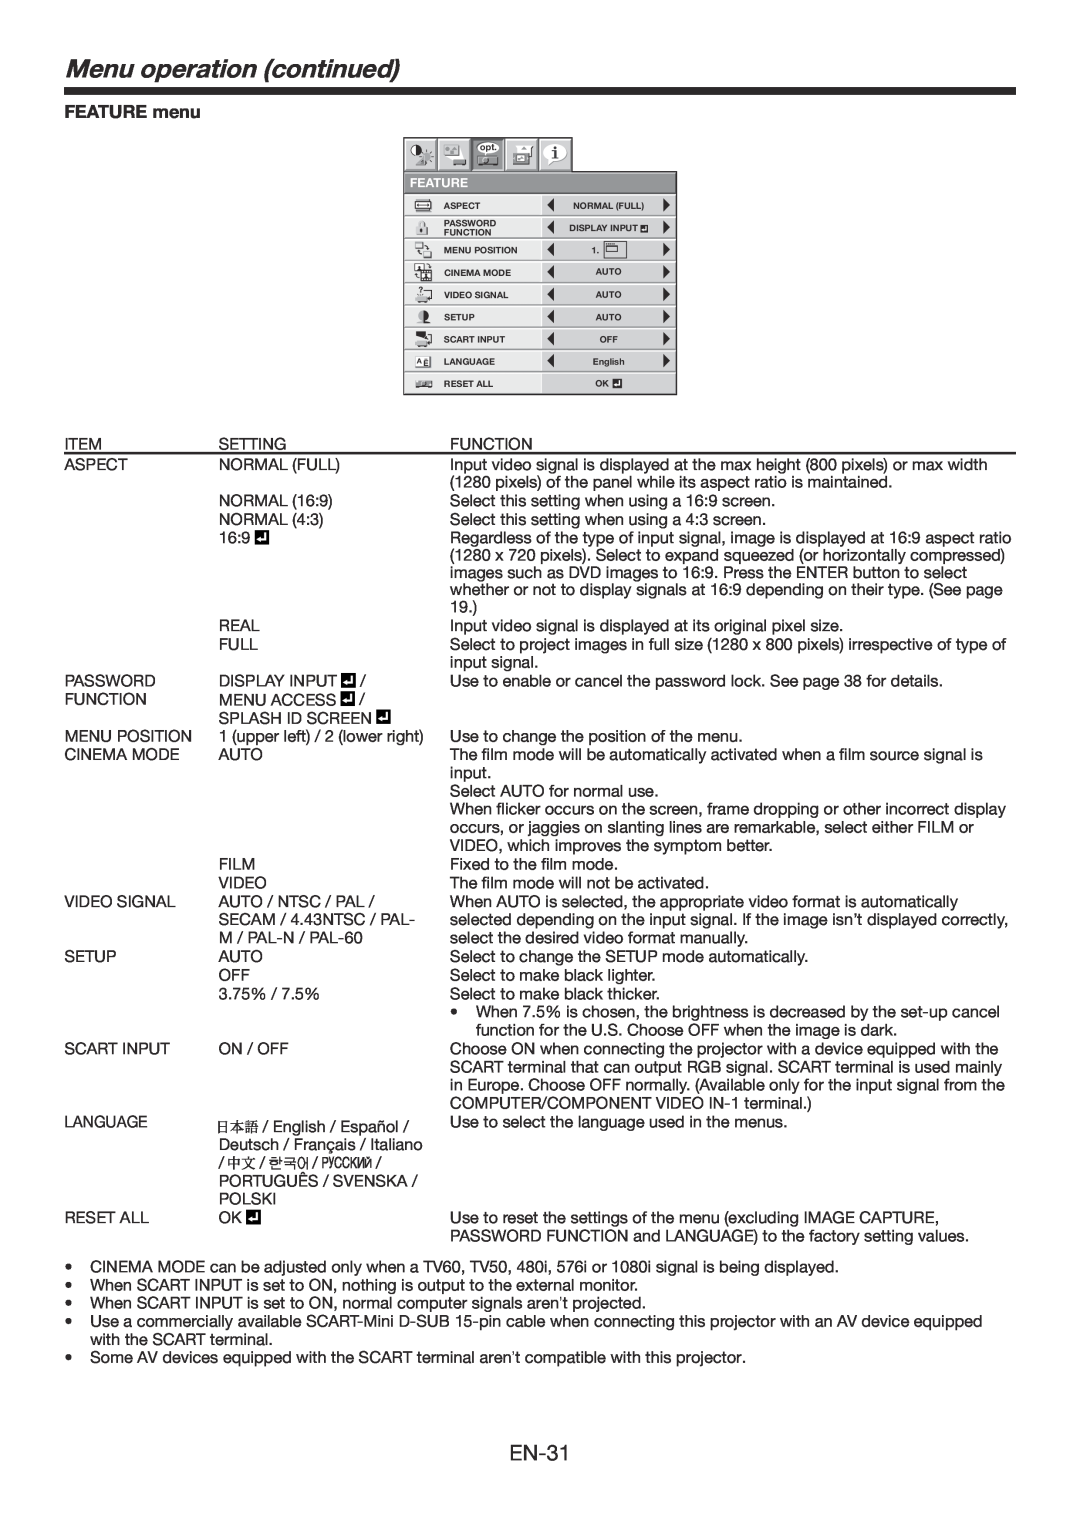 Mitsumi electronic WD3300U user manual Menu operation continued, EN-31, FEATURE menu 